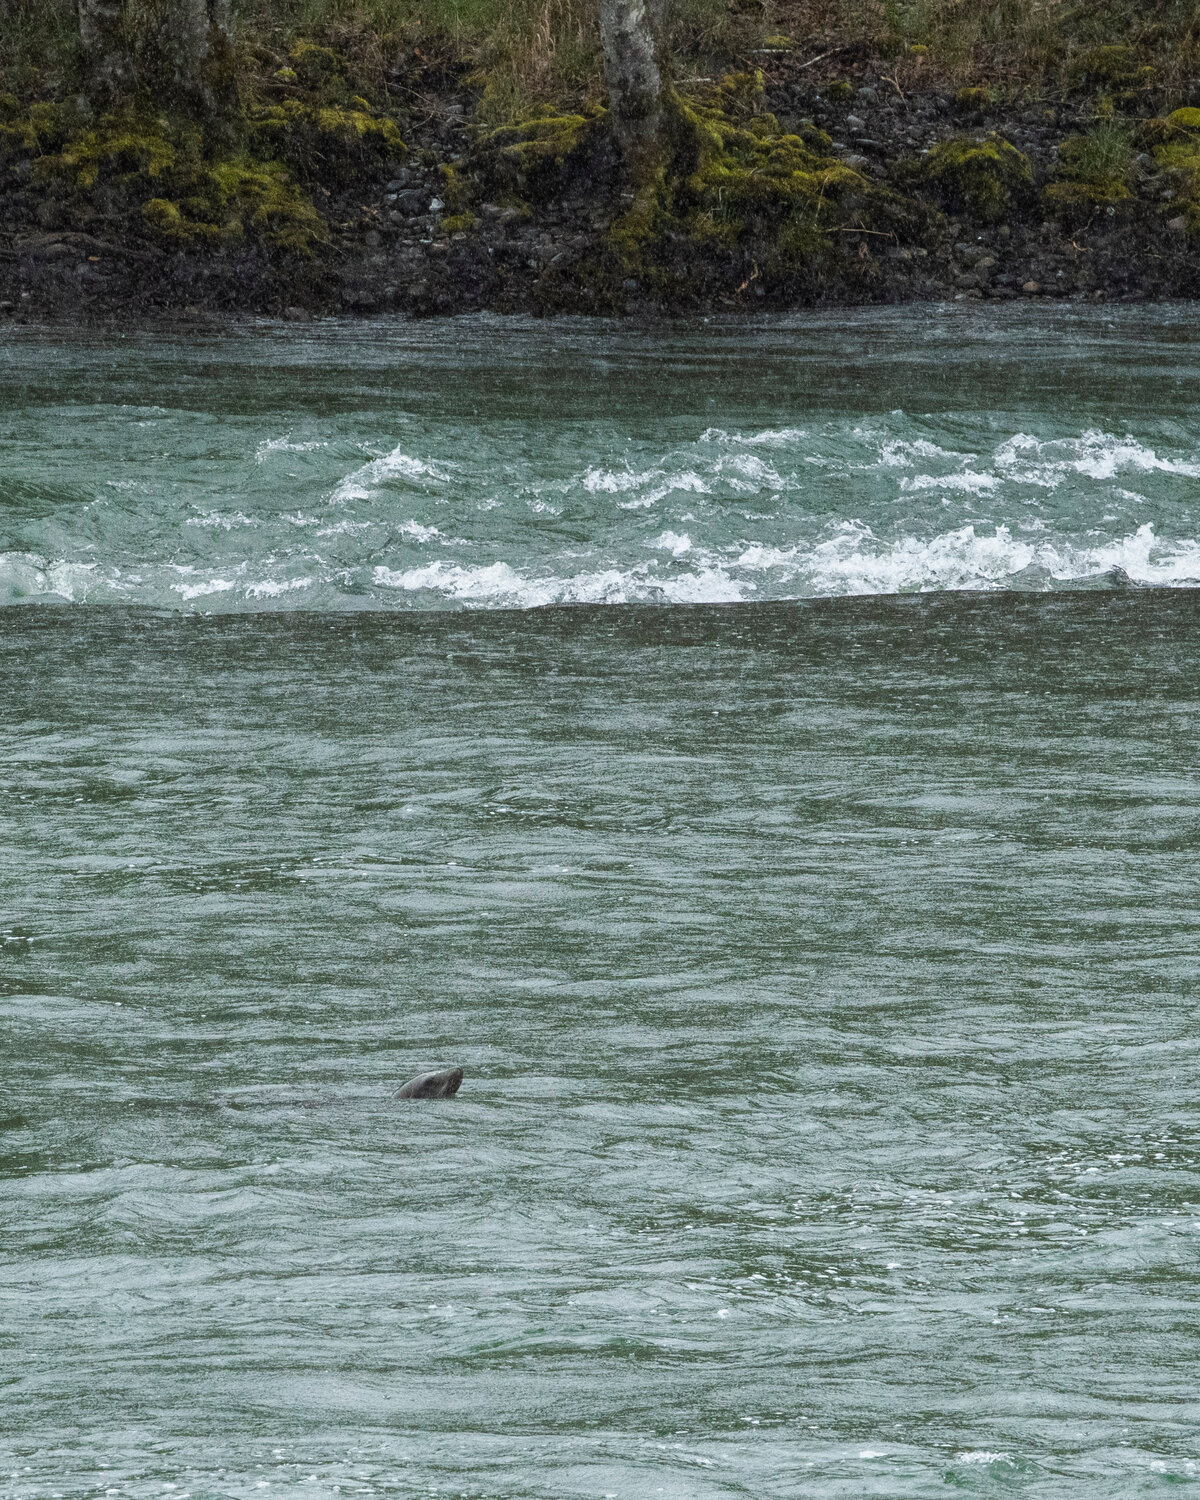 A sea lion stalks salmon outside the Cowlitz Salmon Hatchery in Salkum on Monday.